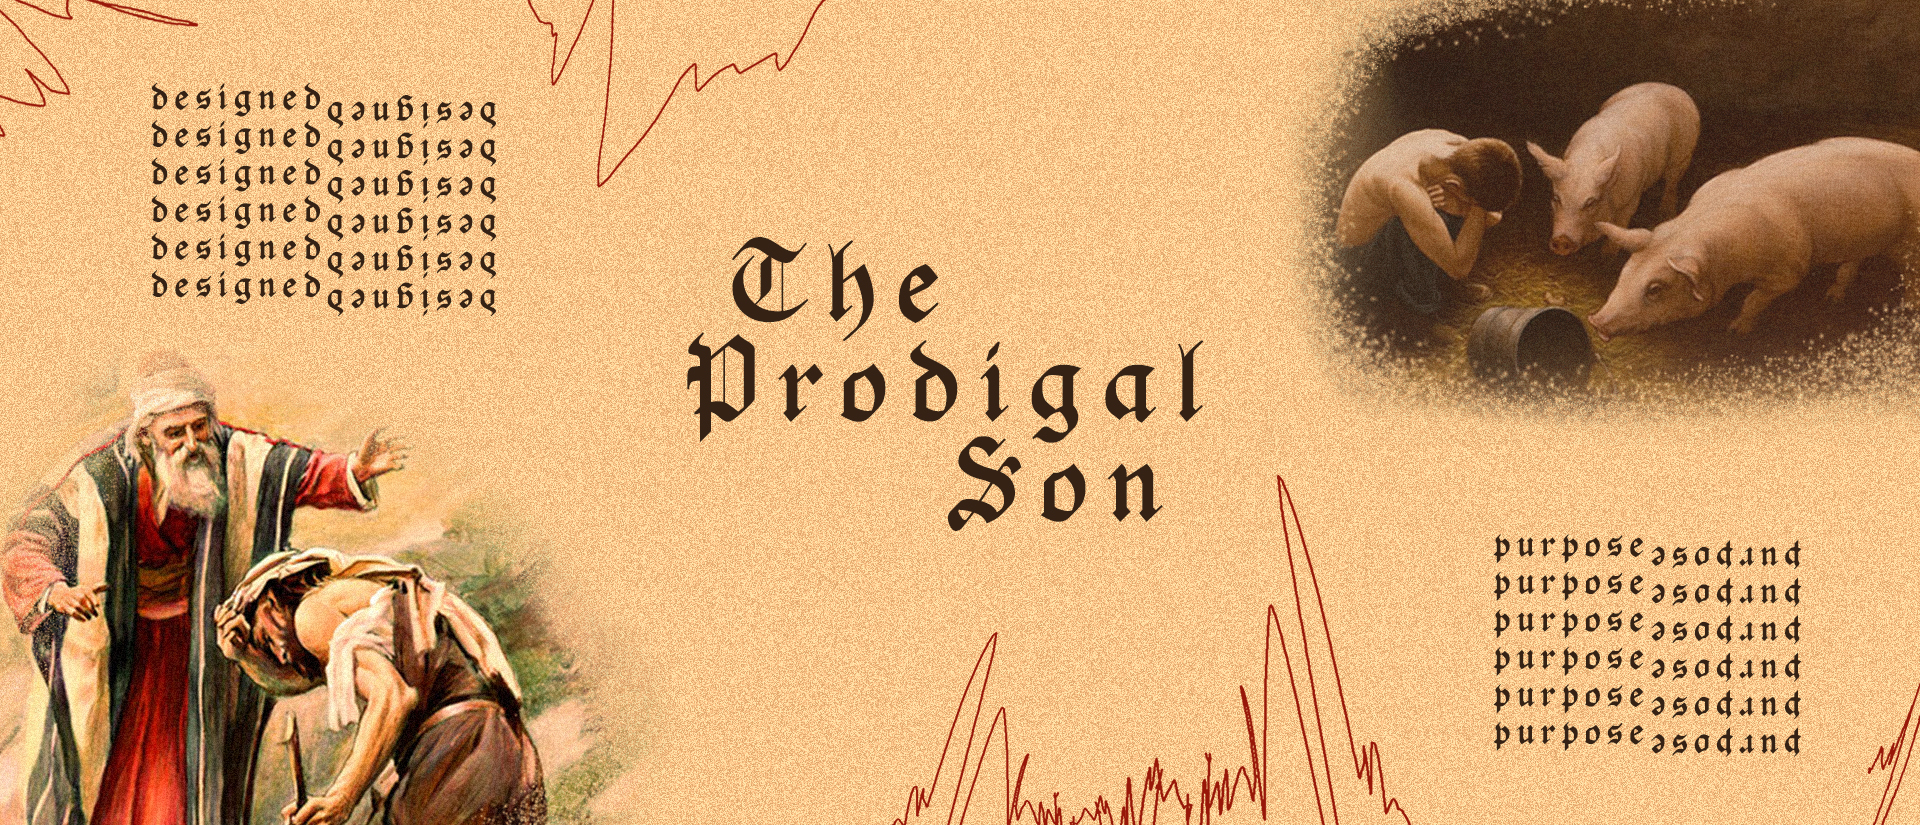 The Prodigal Son.jpg